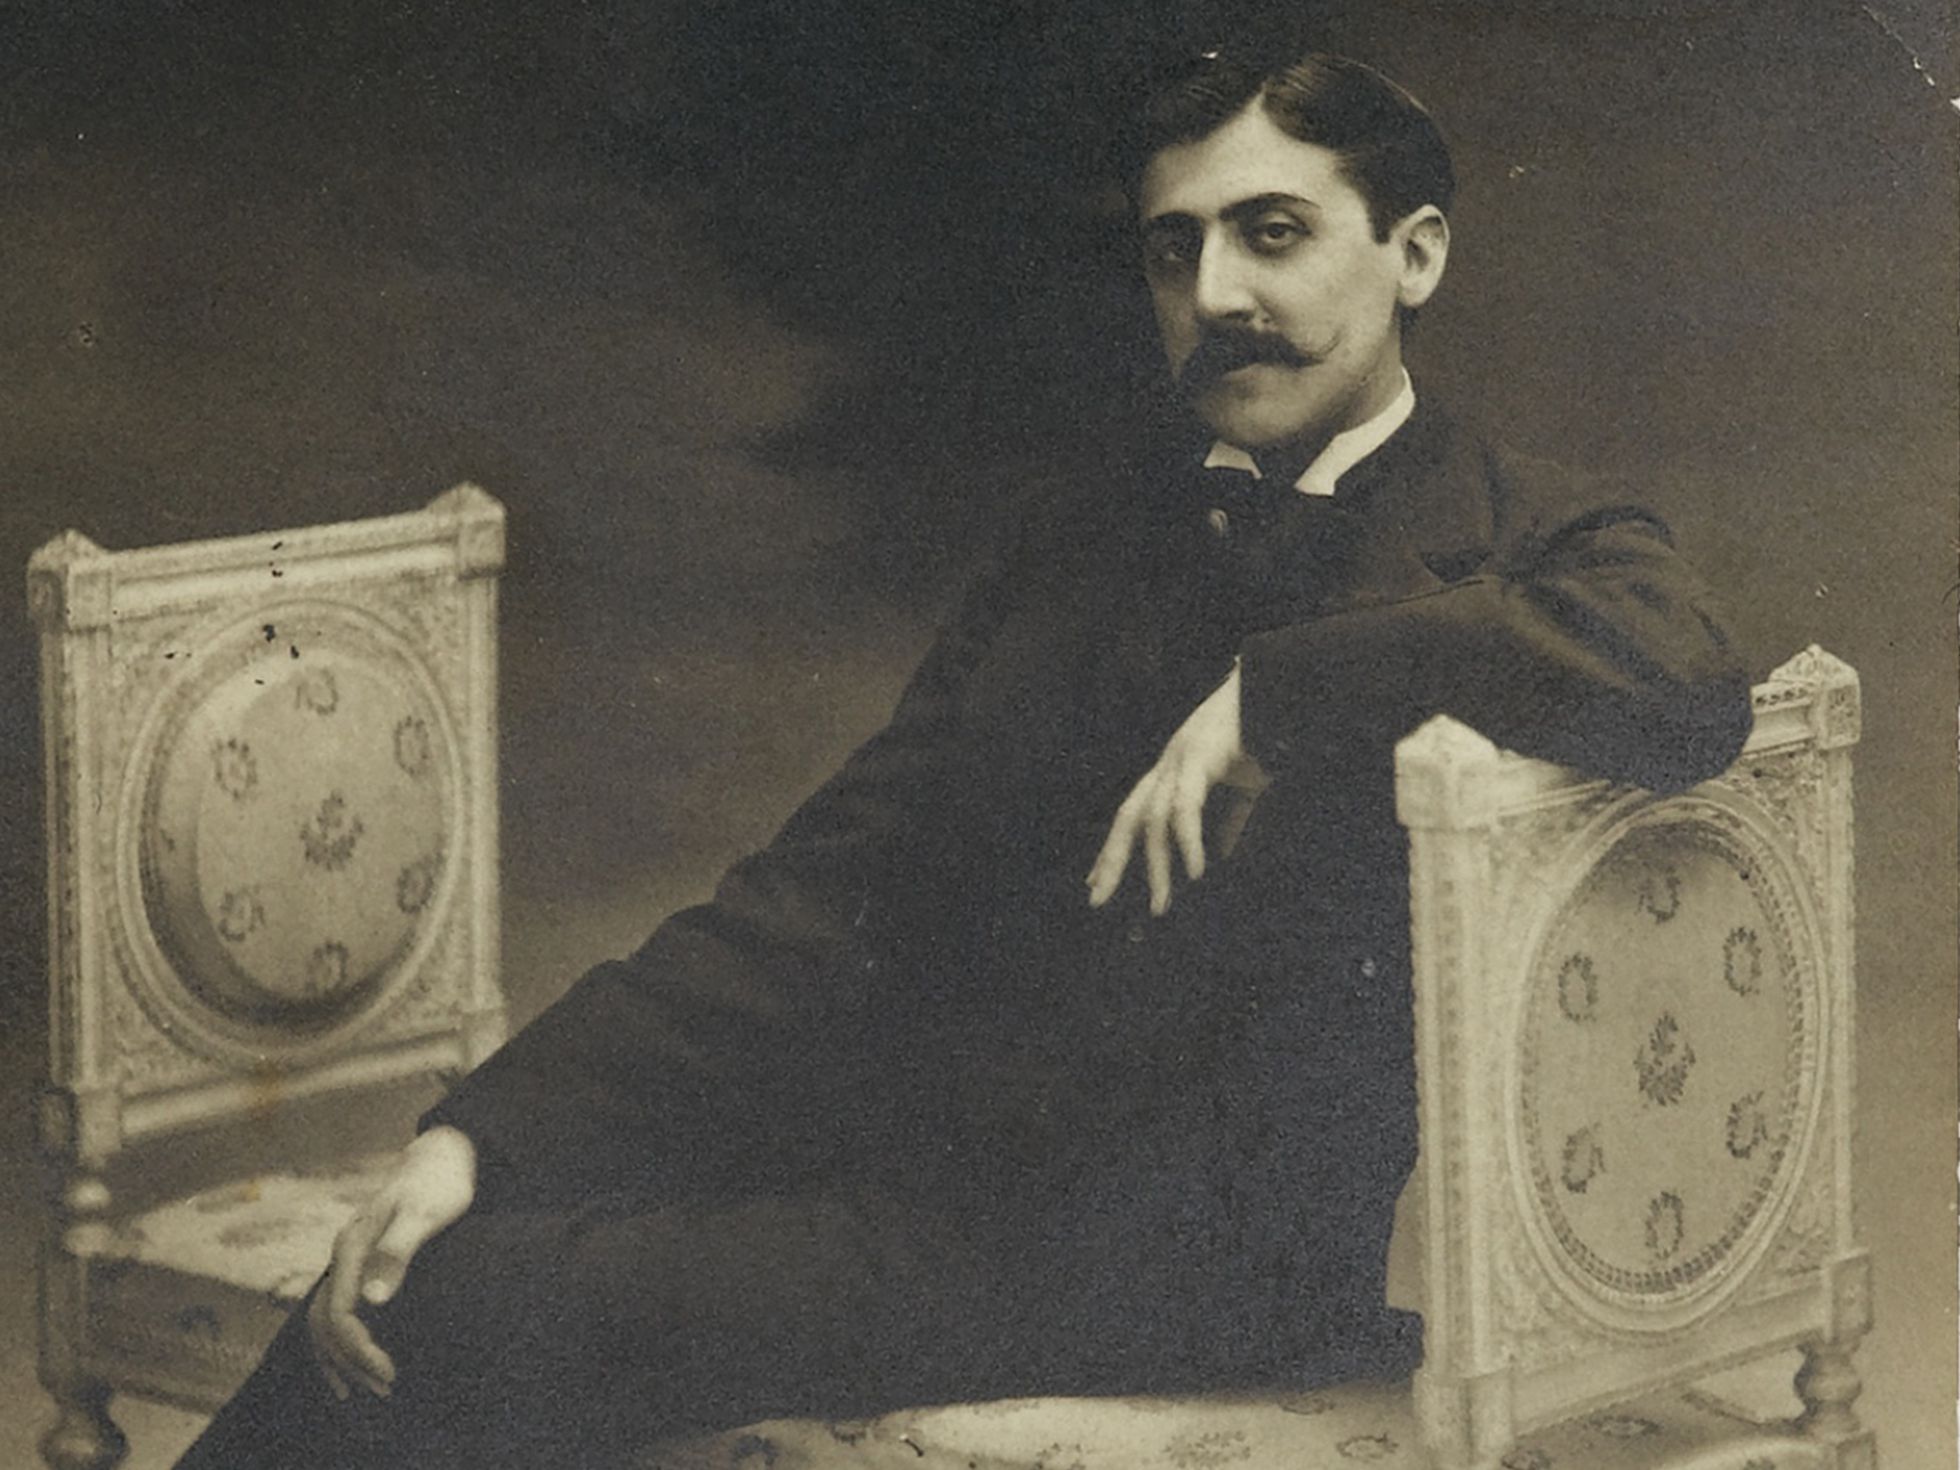 Marcel Proust (Fine Art Images/Heritage Images/Getty Images)